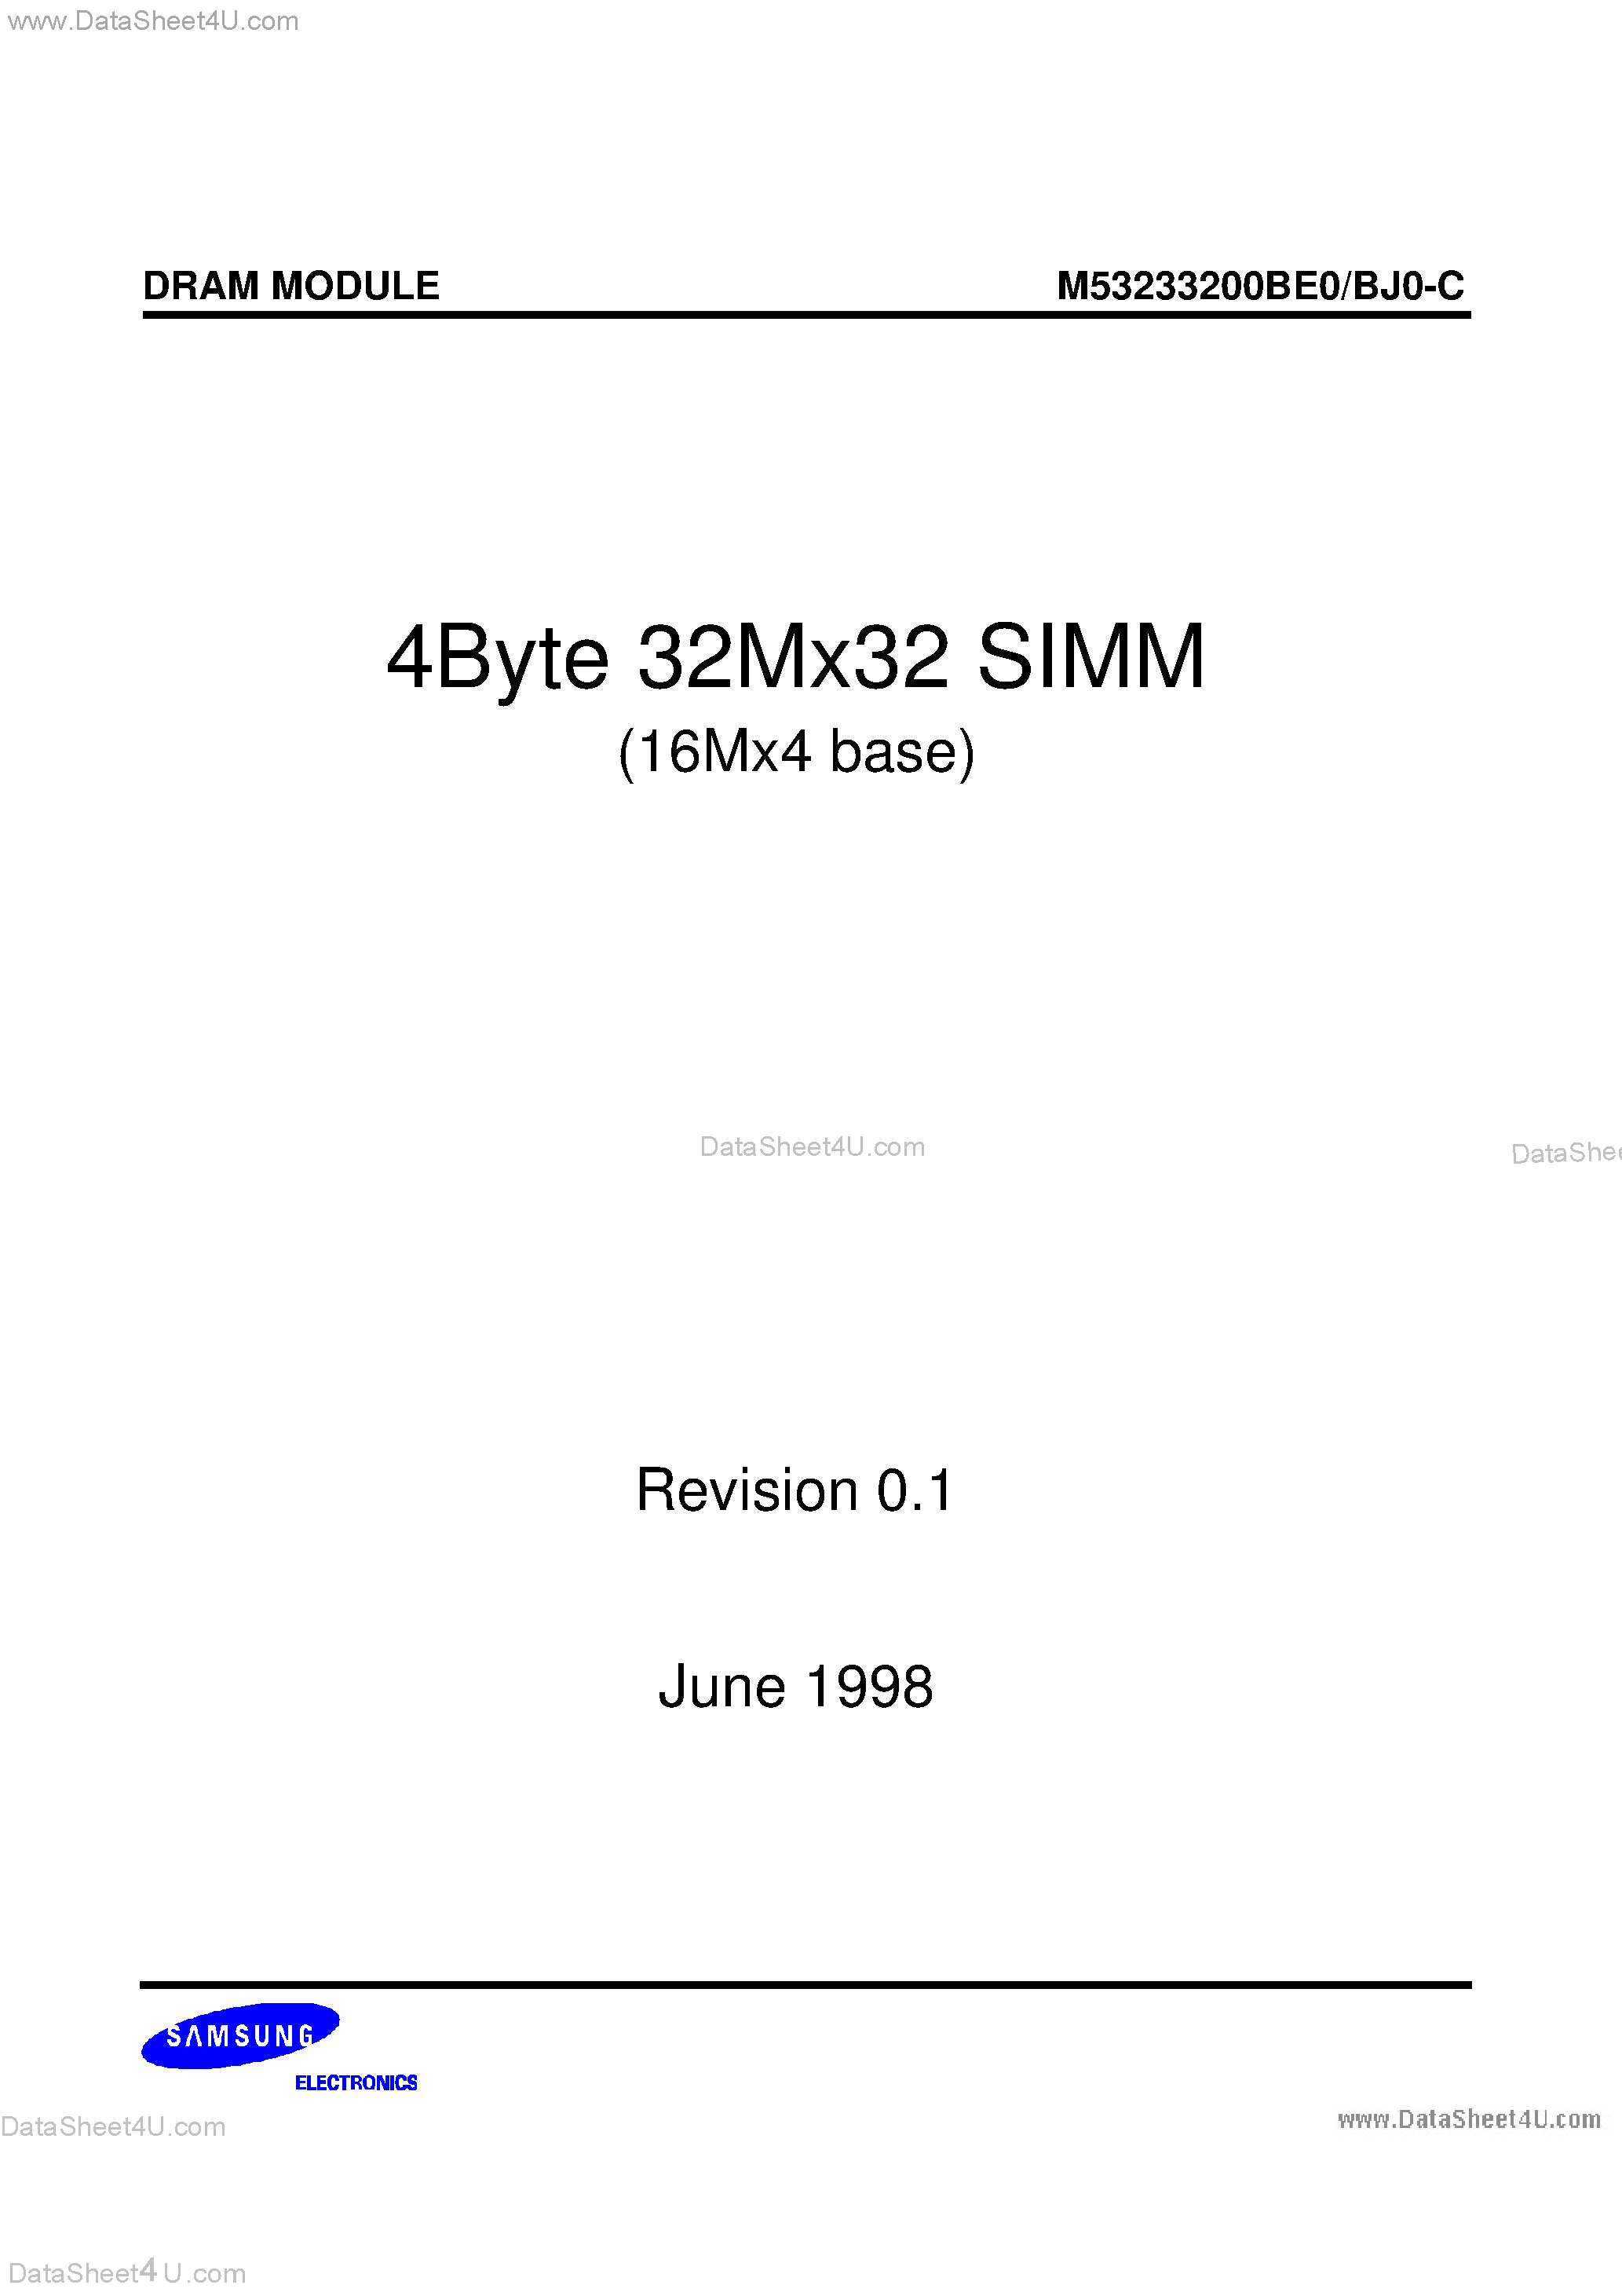 Даташит M53233200BE0 - (M53233200BE0/BJ0-C) DRAM Module страница 1